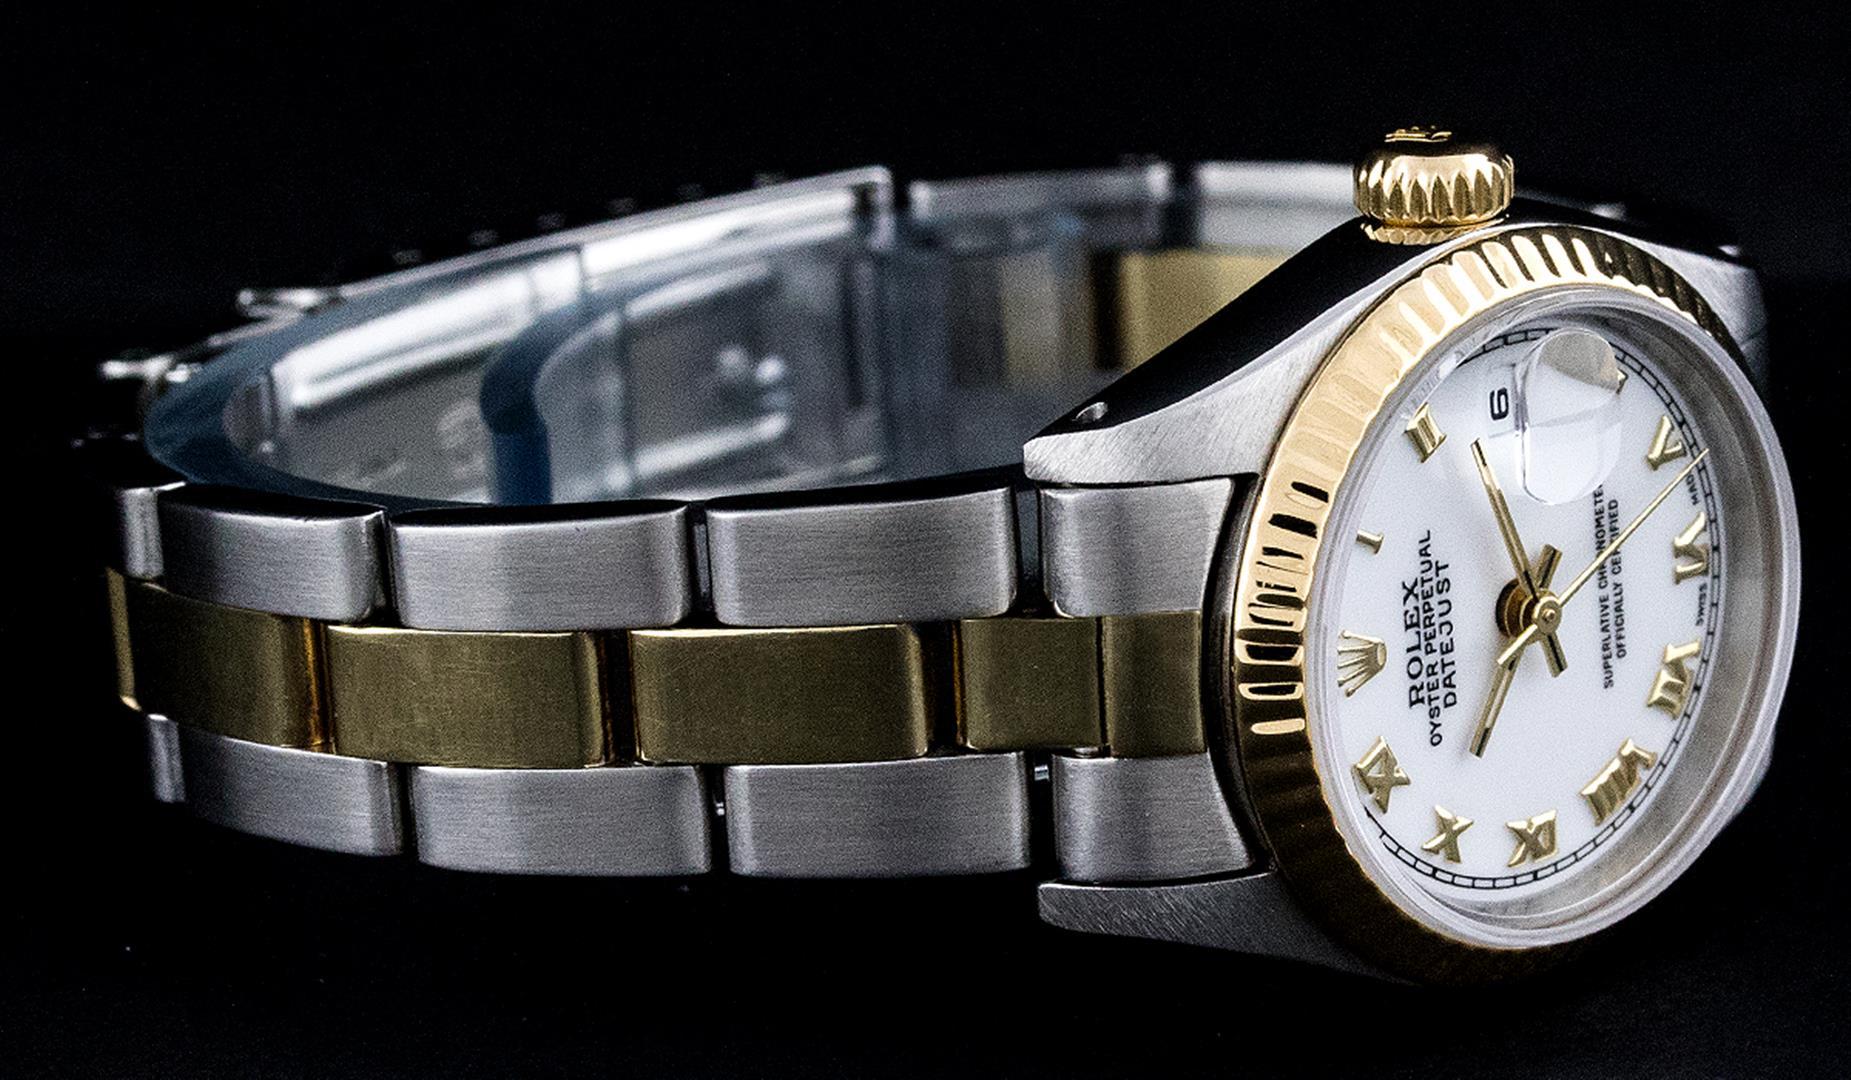 Rolex Ladies White Roman Oyster Band Wristwatch 26MM